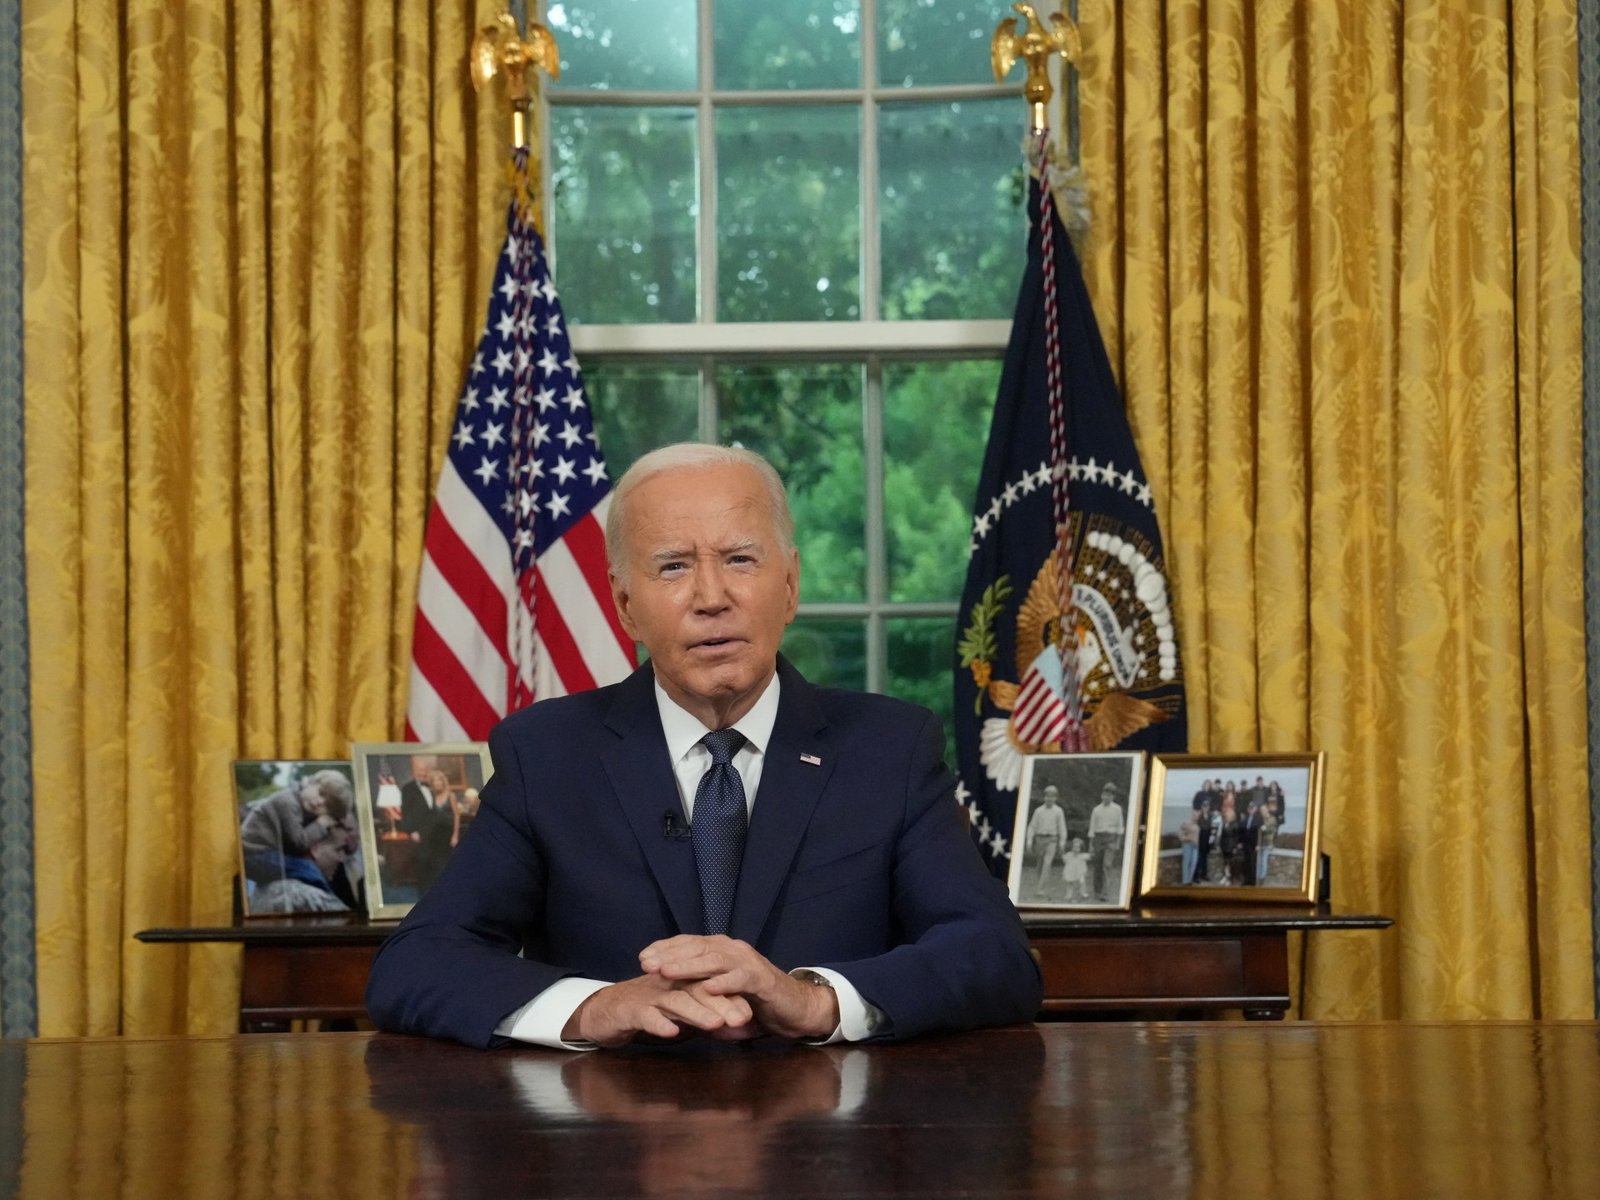 Biden drops out of presidential race, endorses Harris | Joe Biden